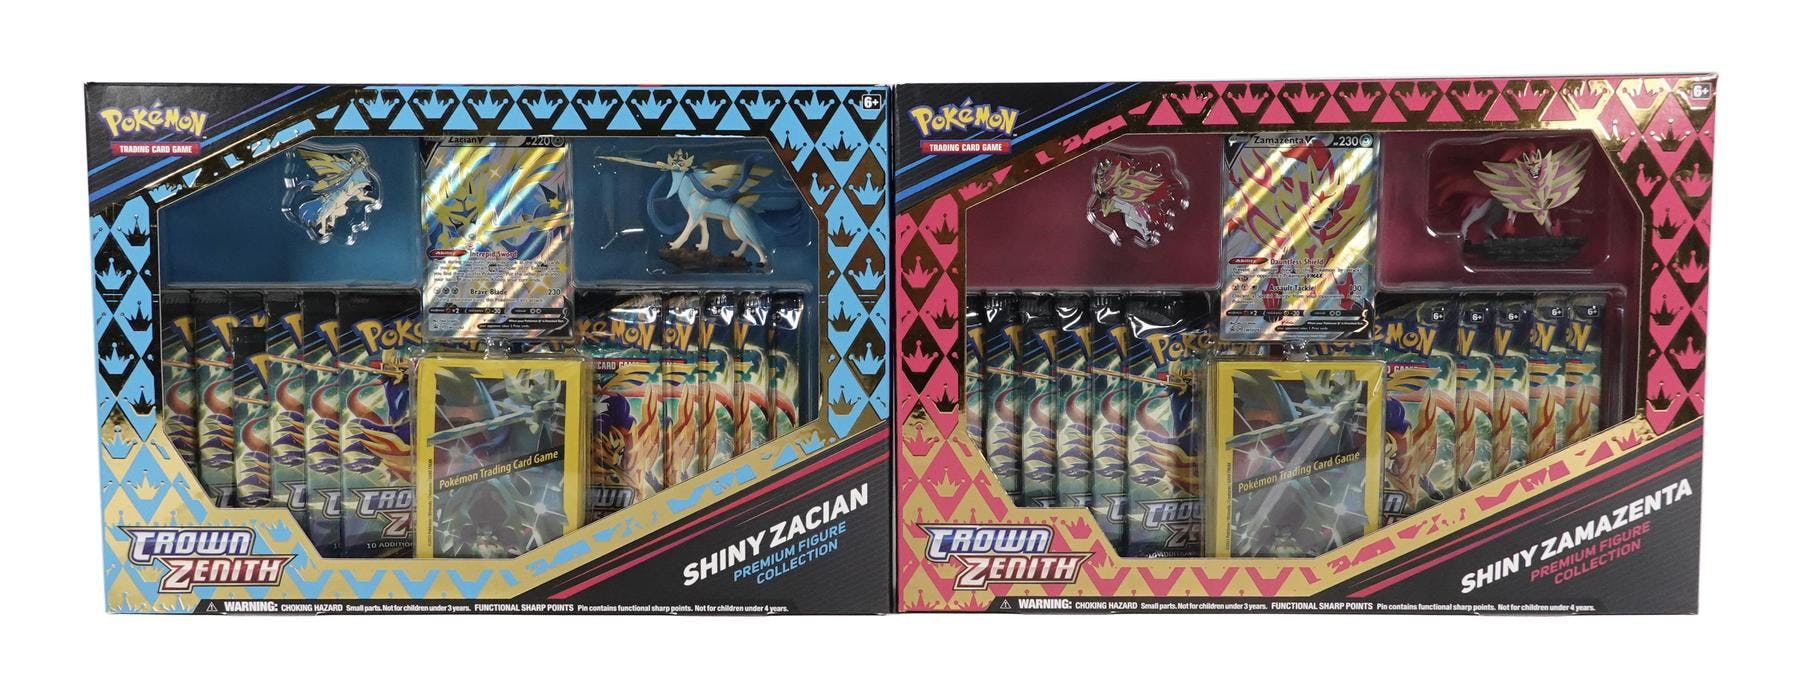 Crown Zenith Shiny Zamazenta Premium Collection Box 